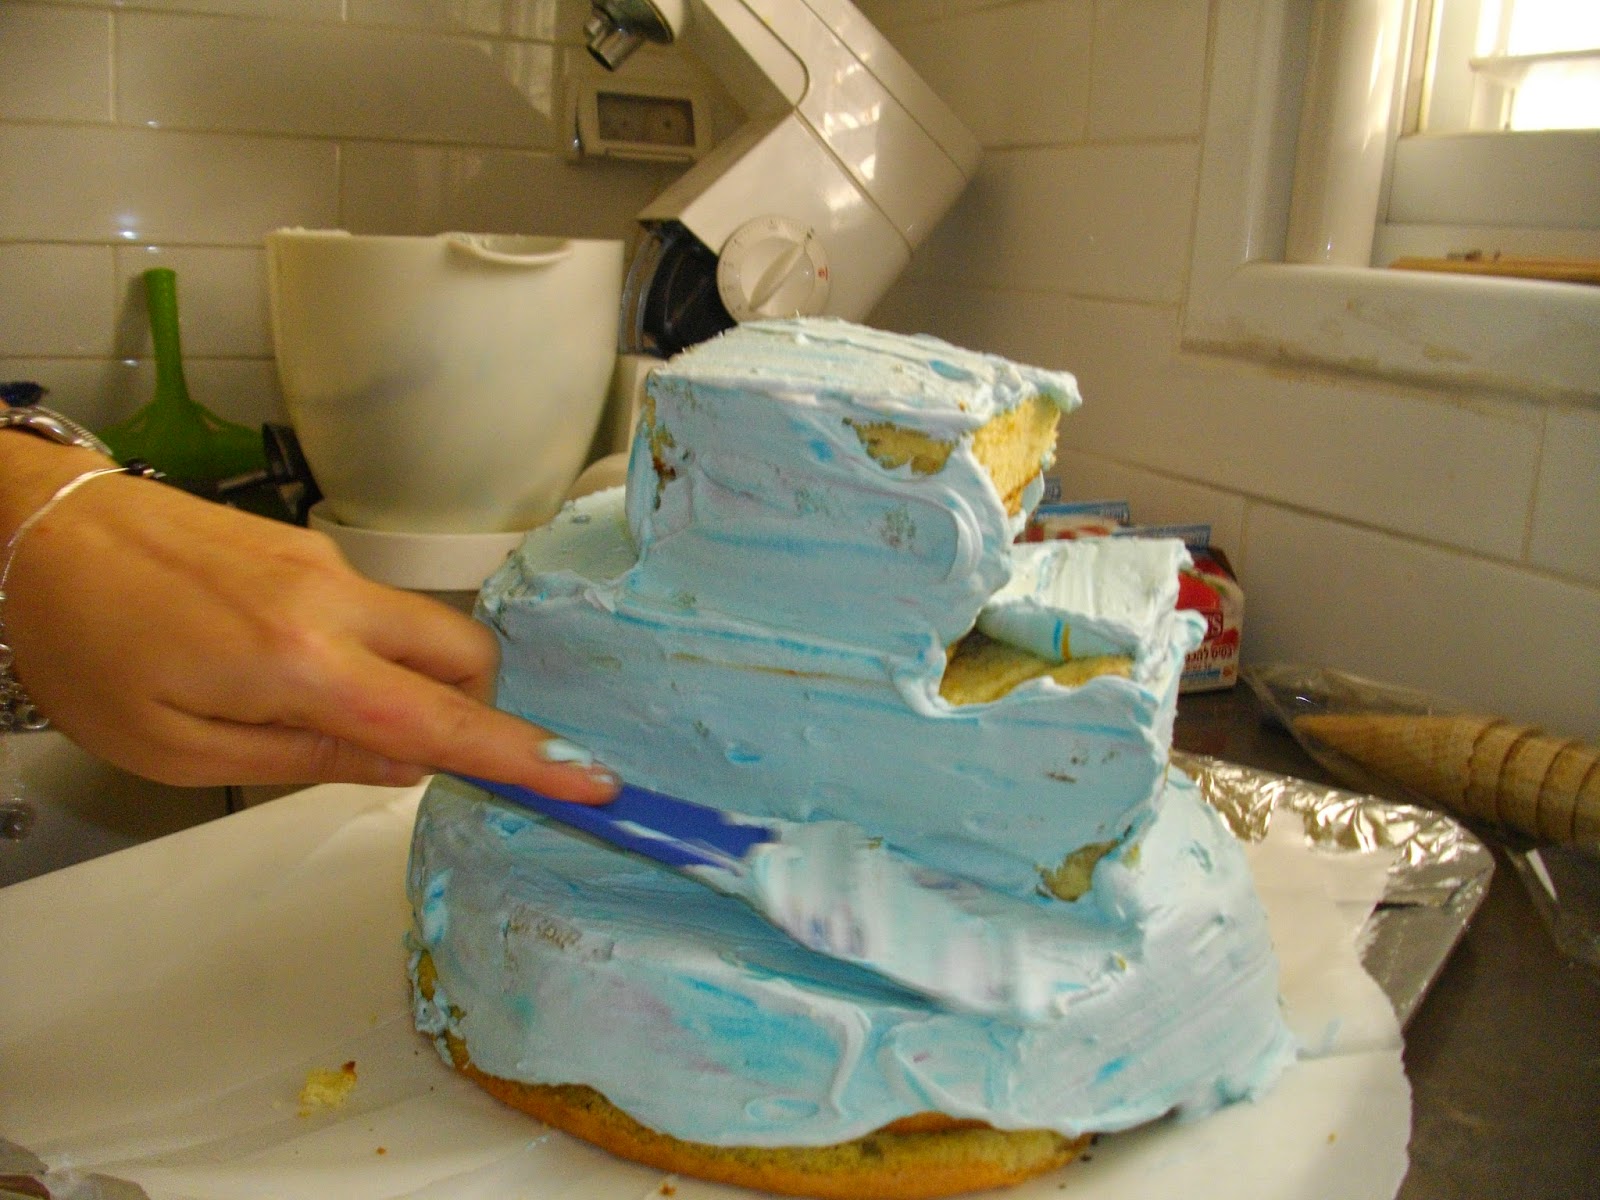 IMGP2870 - עוגת יומולדת בצורת ארמון